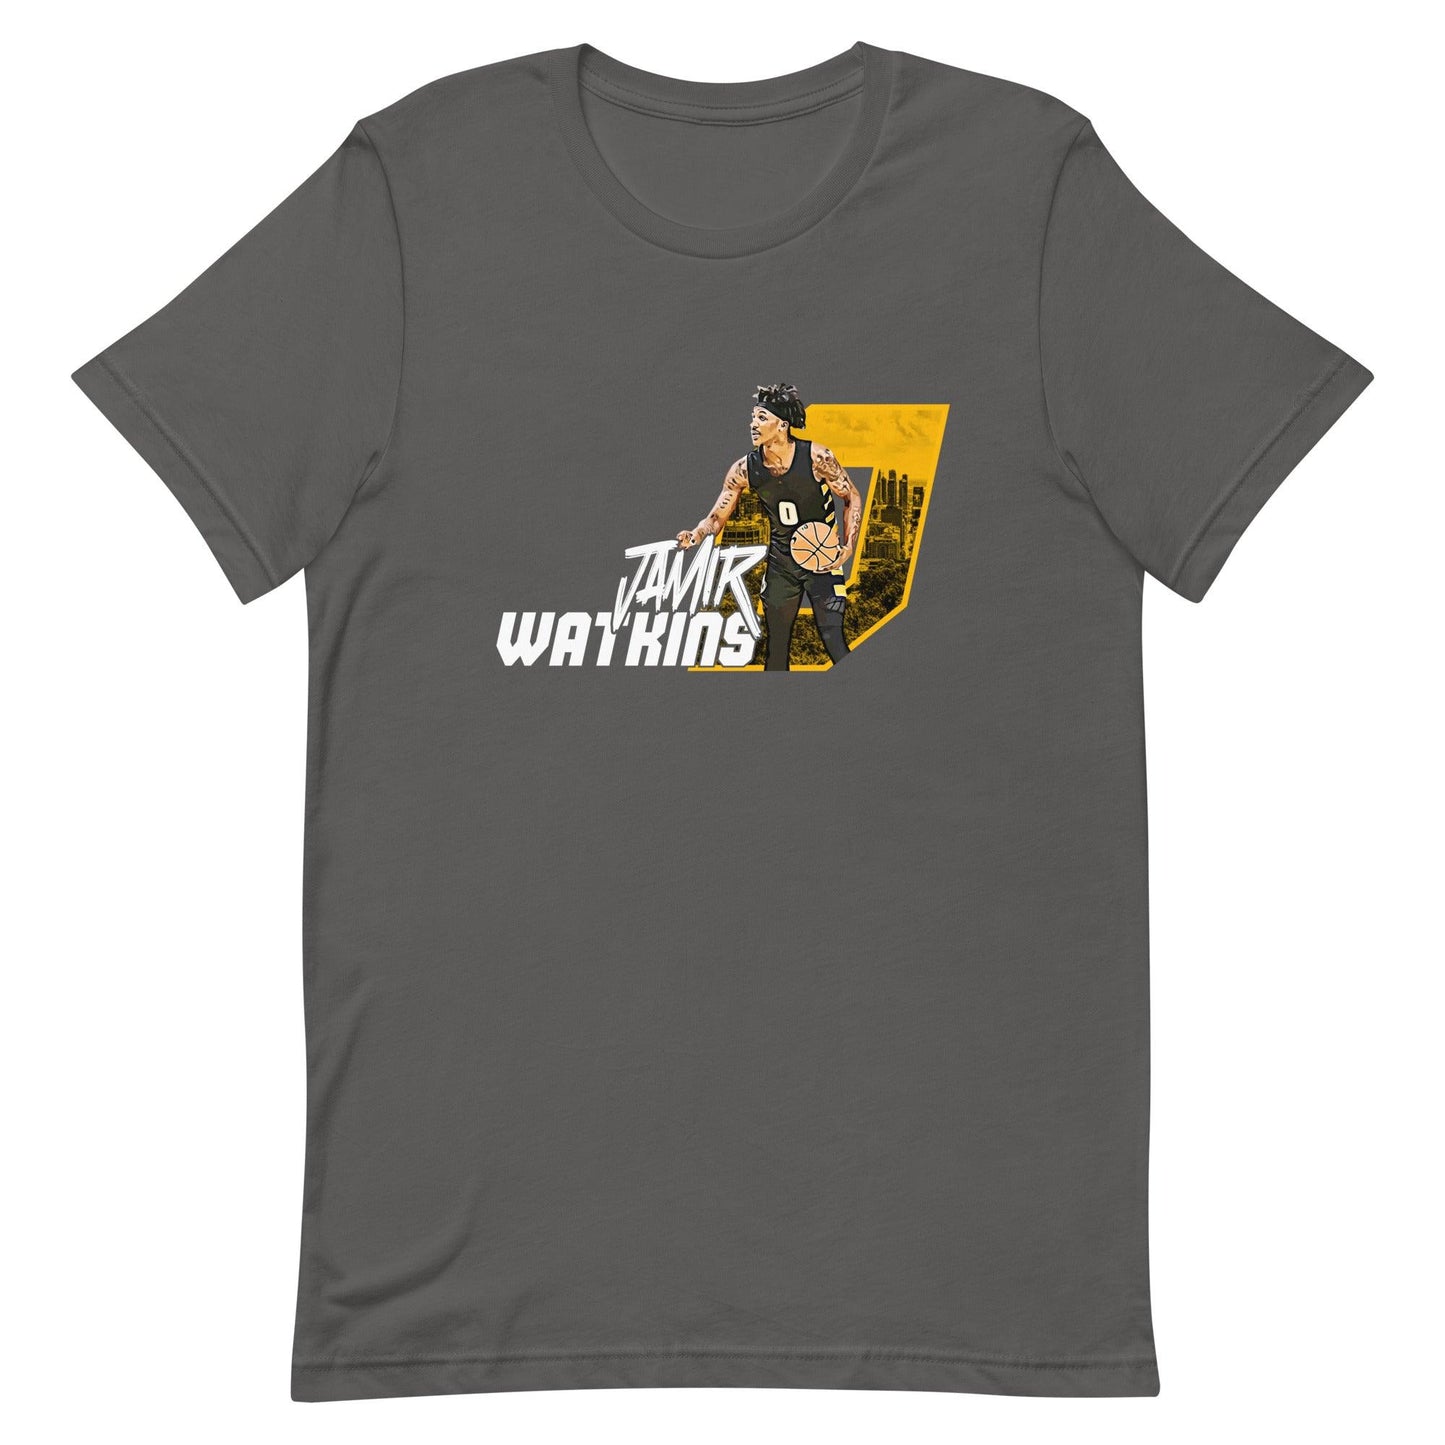 Jamir Watkins "Gameday" t-shirt - Fan Arch